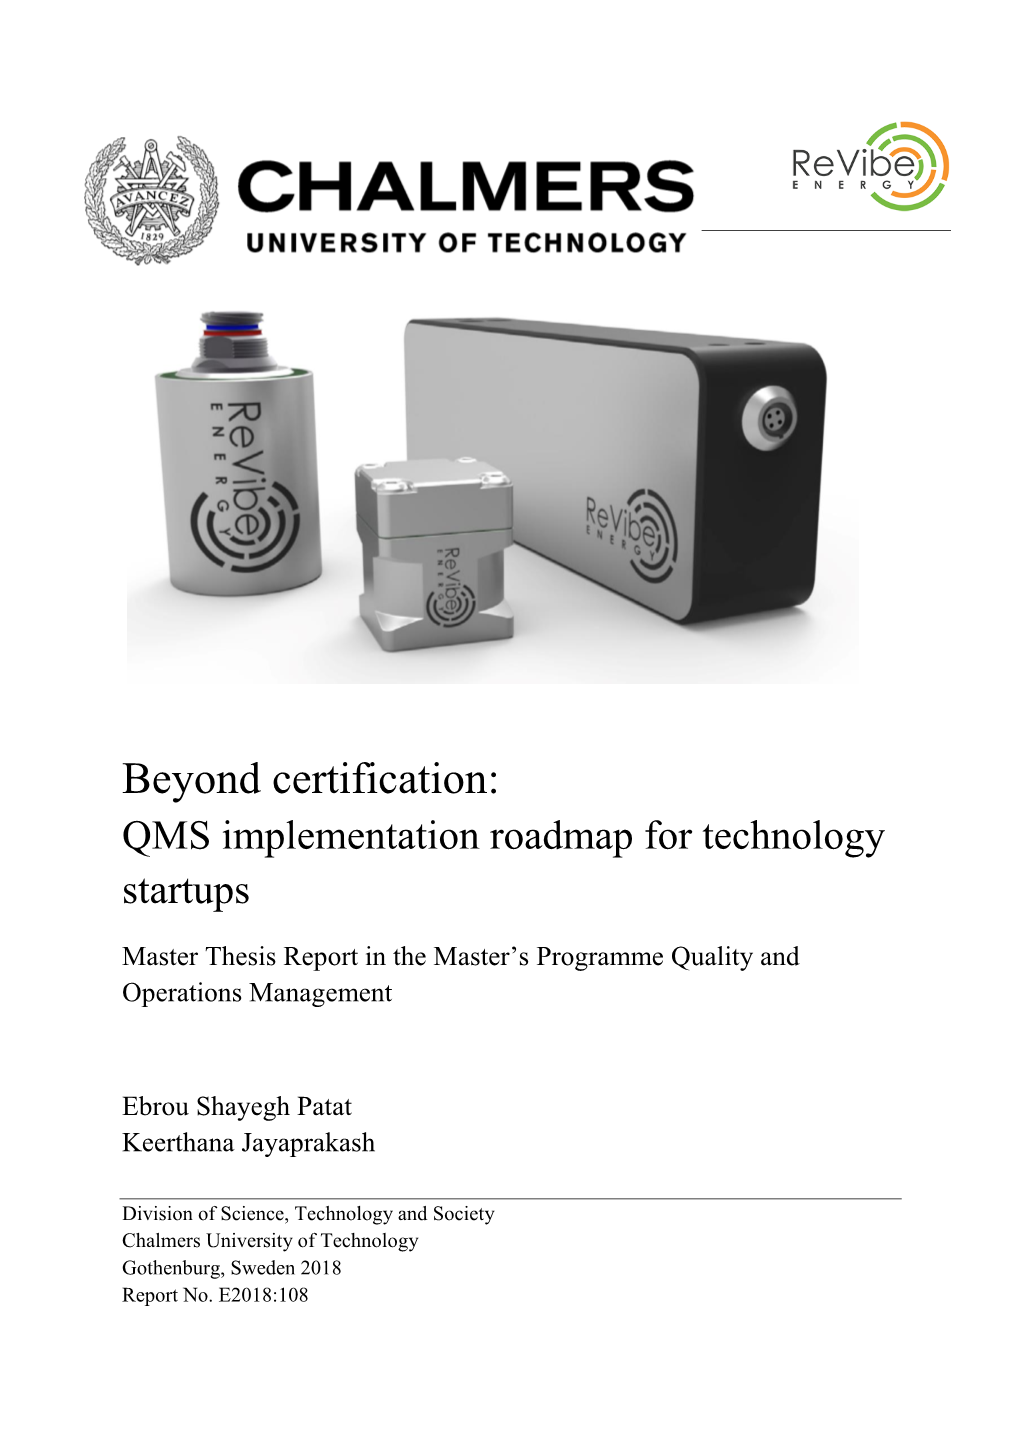 Beyond Certification: QMS Implementation Roadmap for Technology Startups